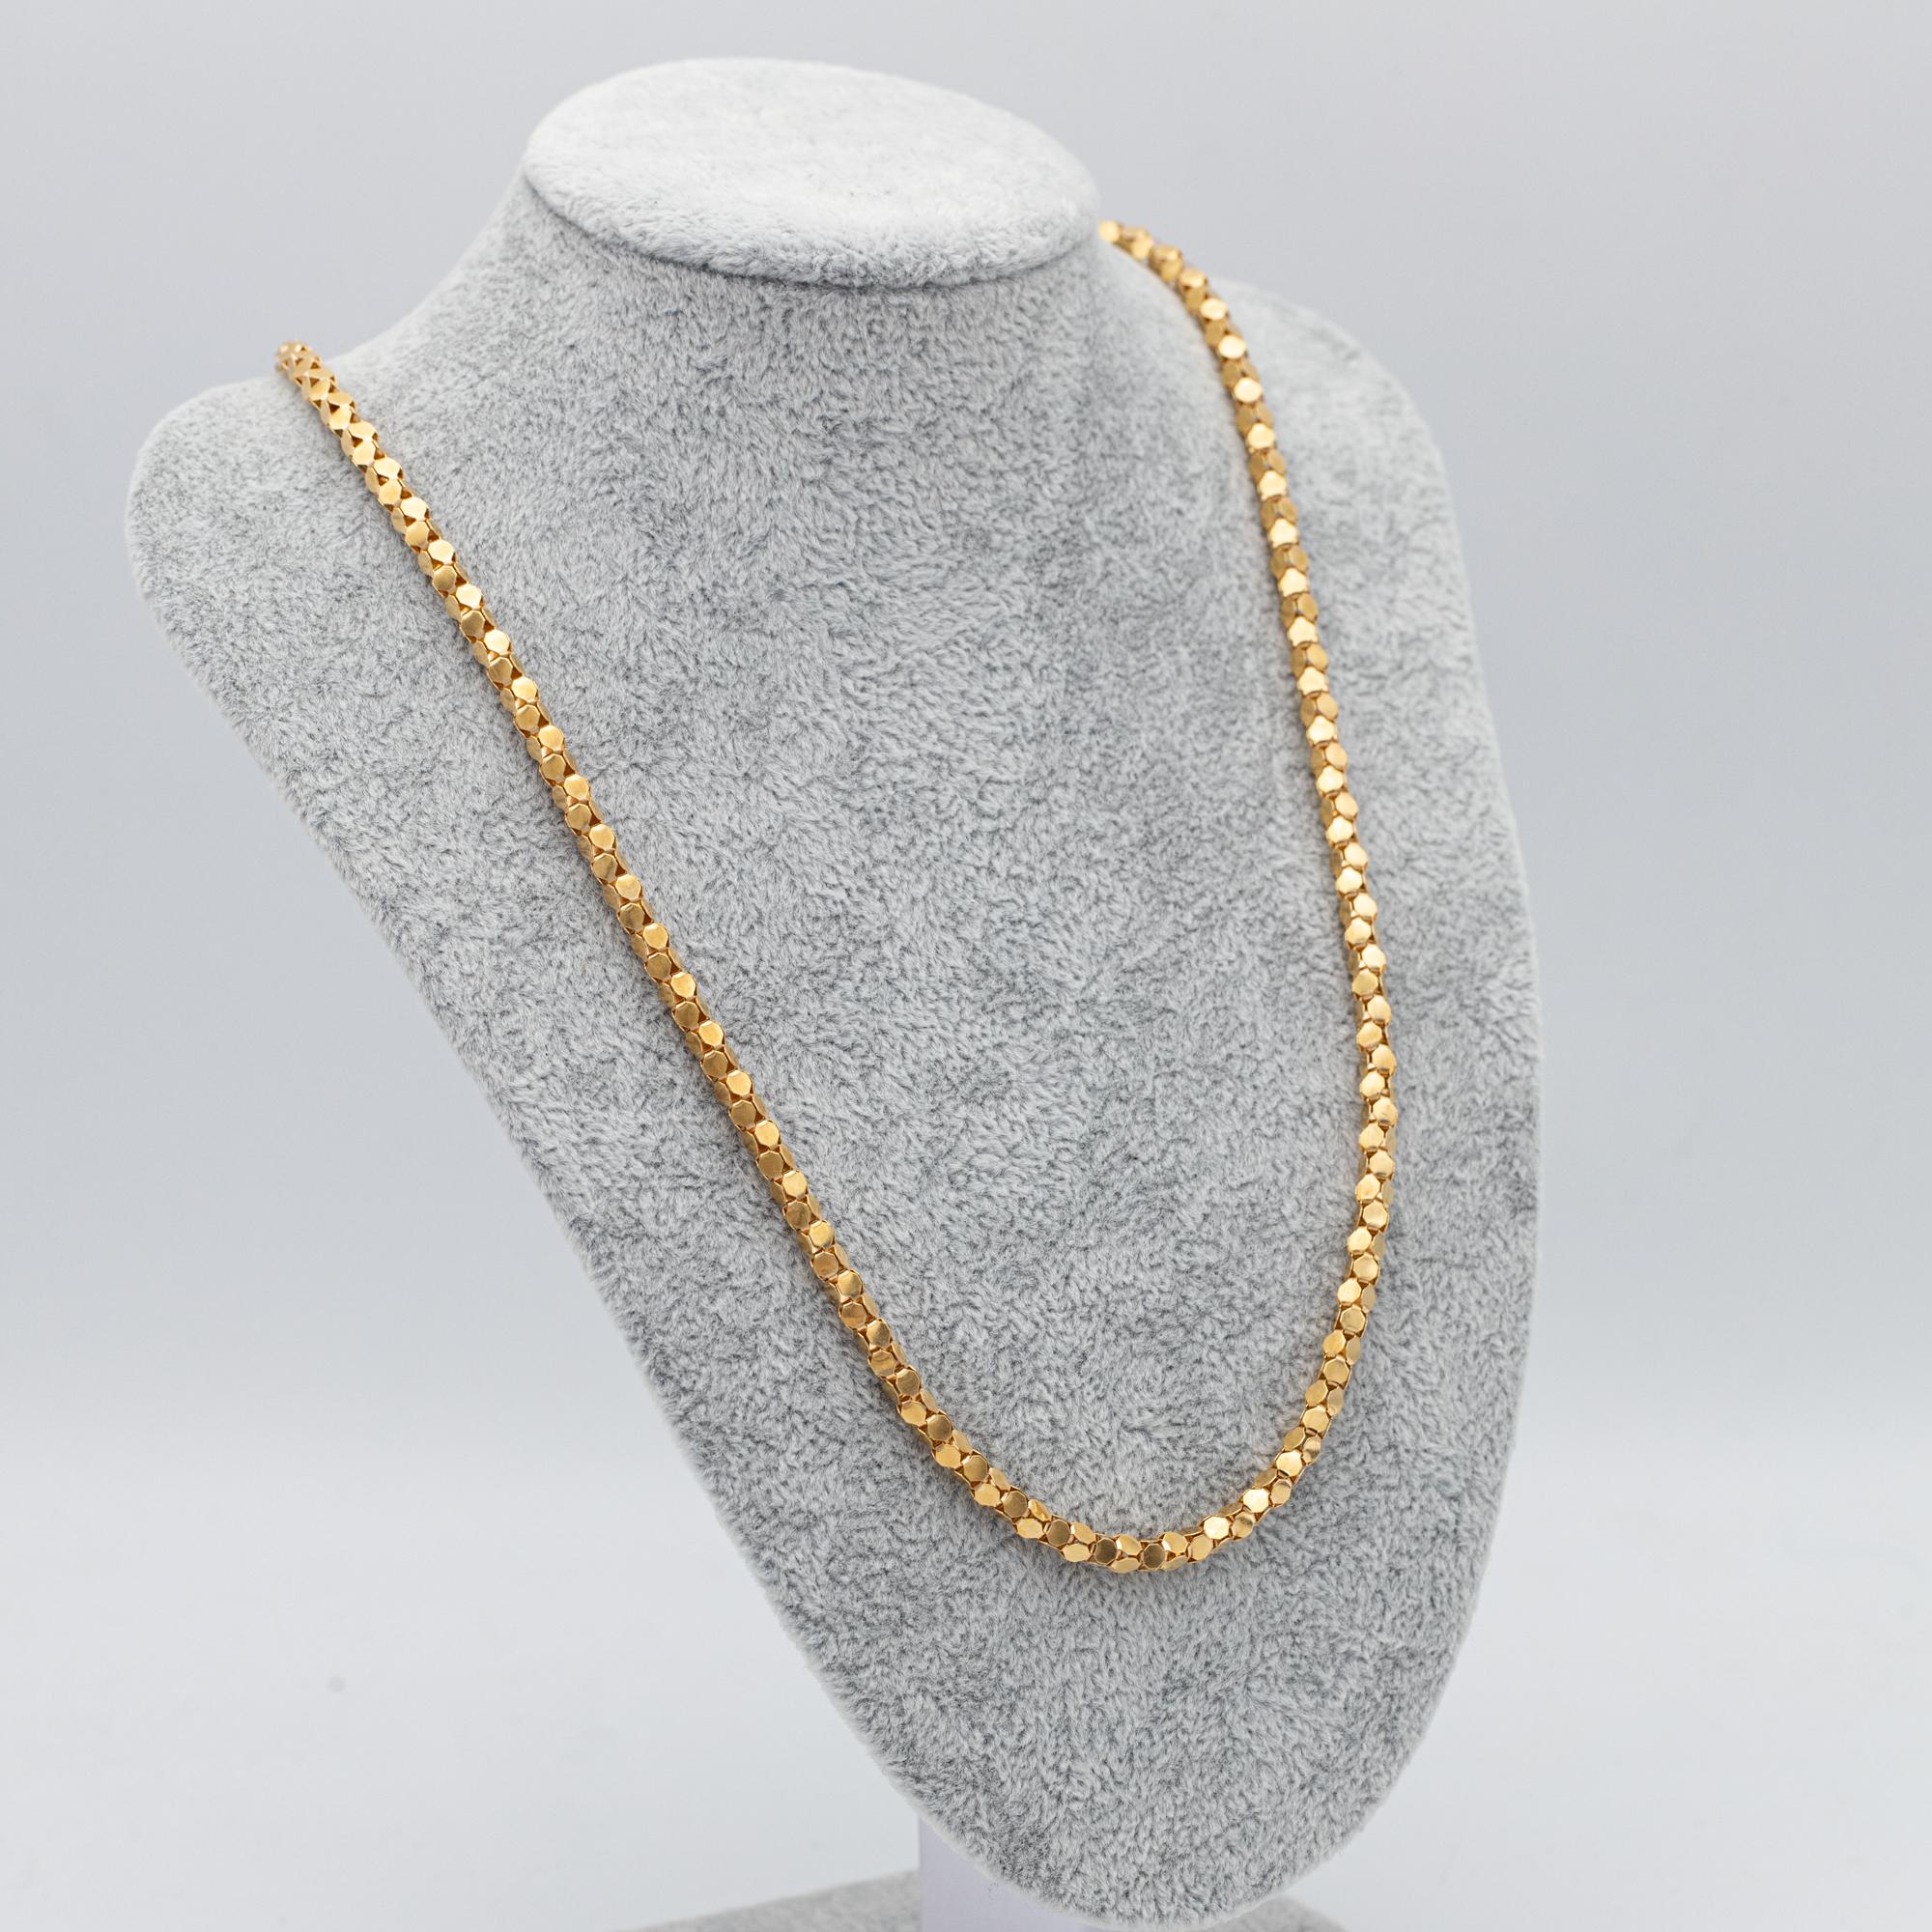 18k solid gold Retro popcorn chain - Italian 1960's necklace - 63.5 cm - 25 inch For Sale 1